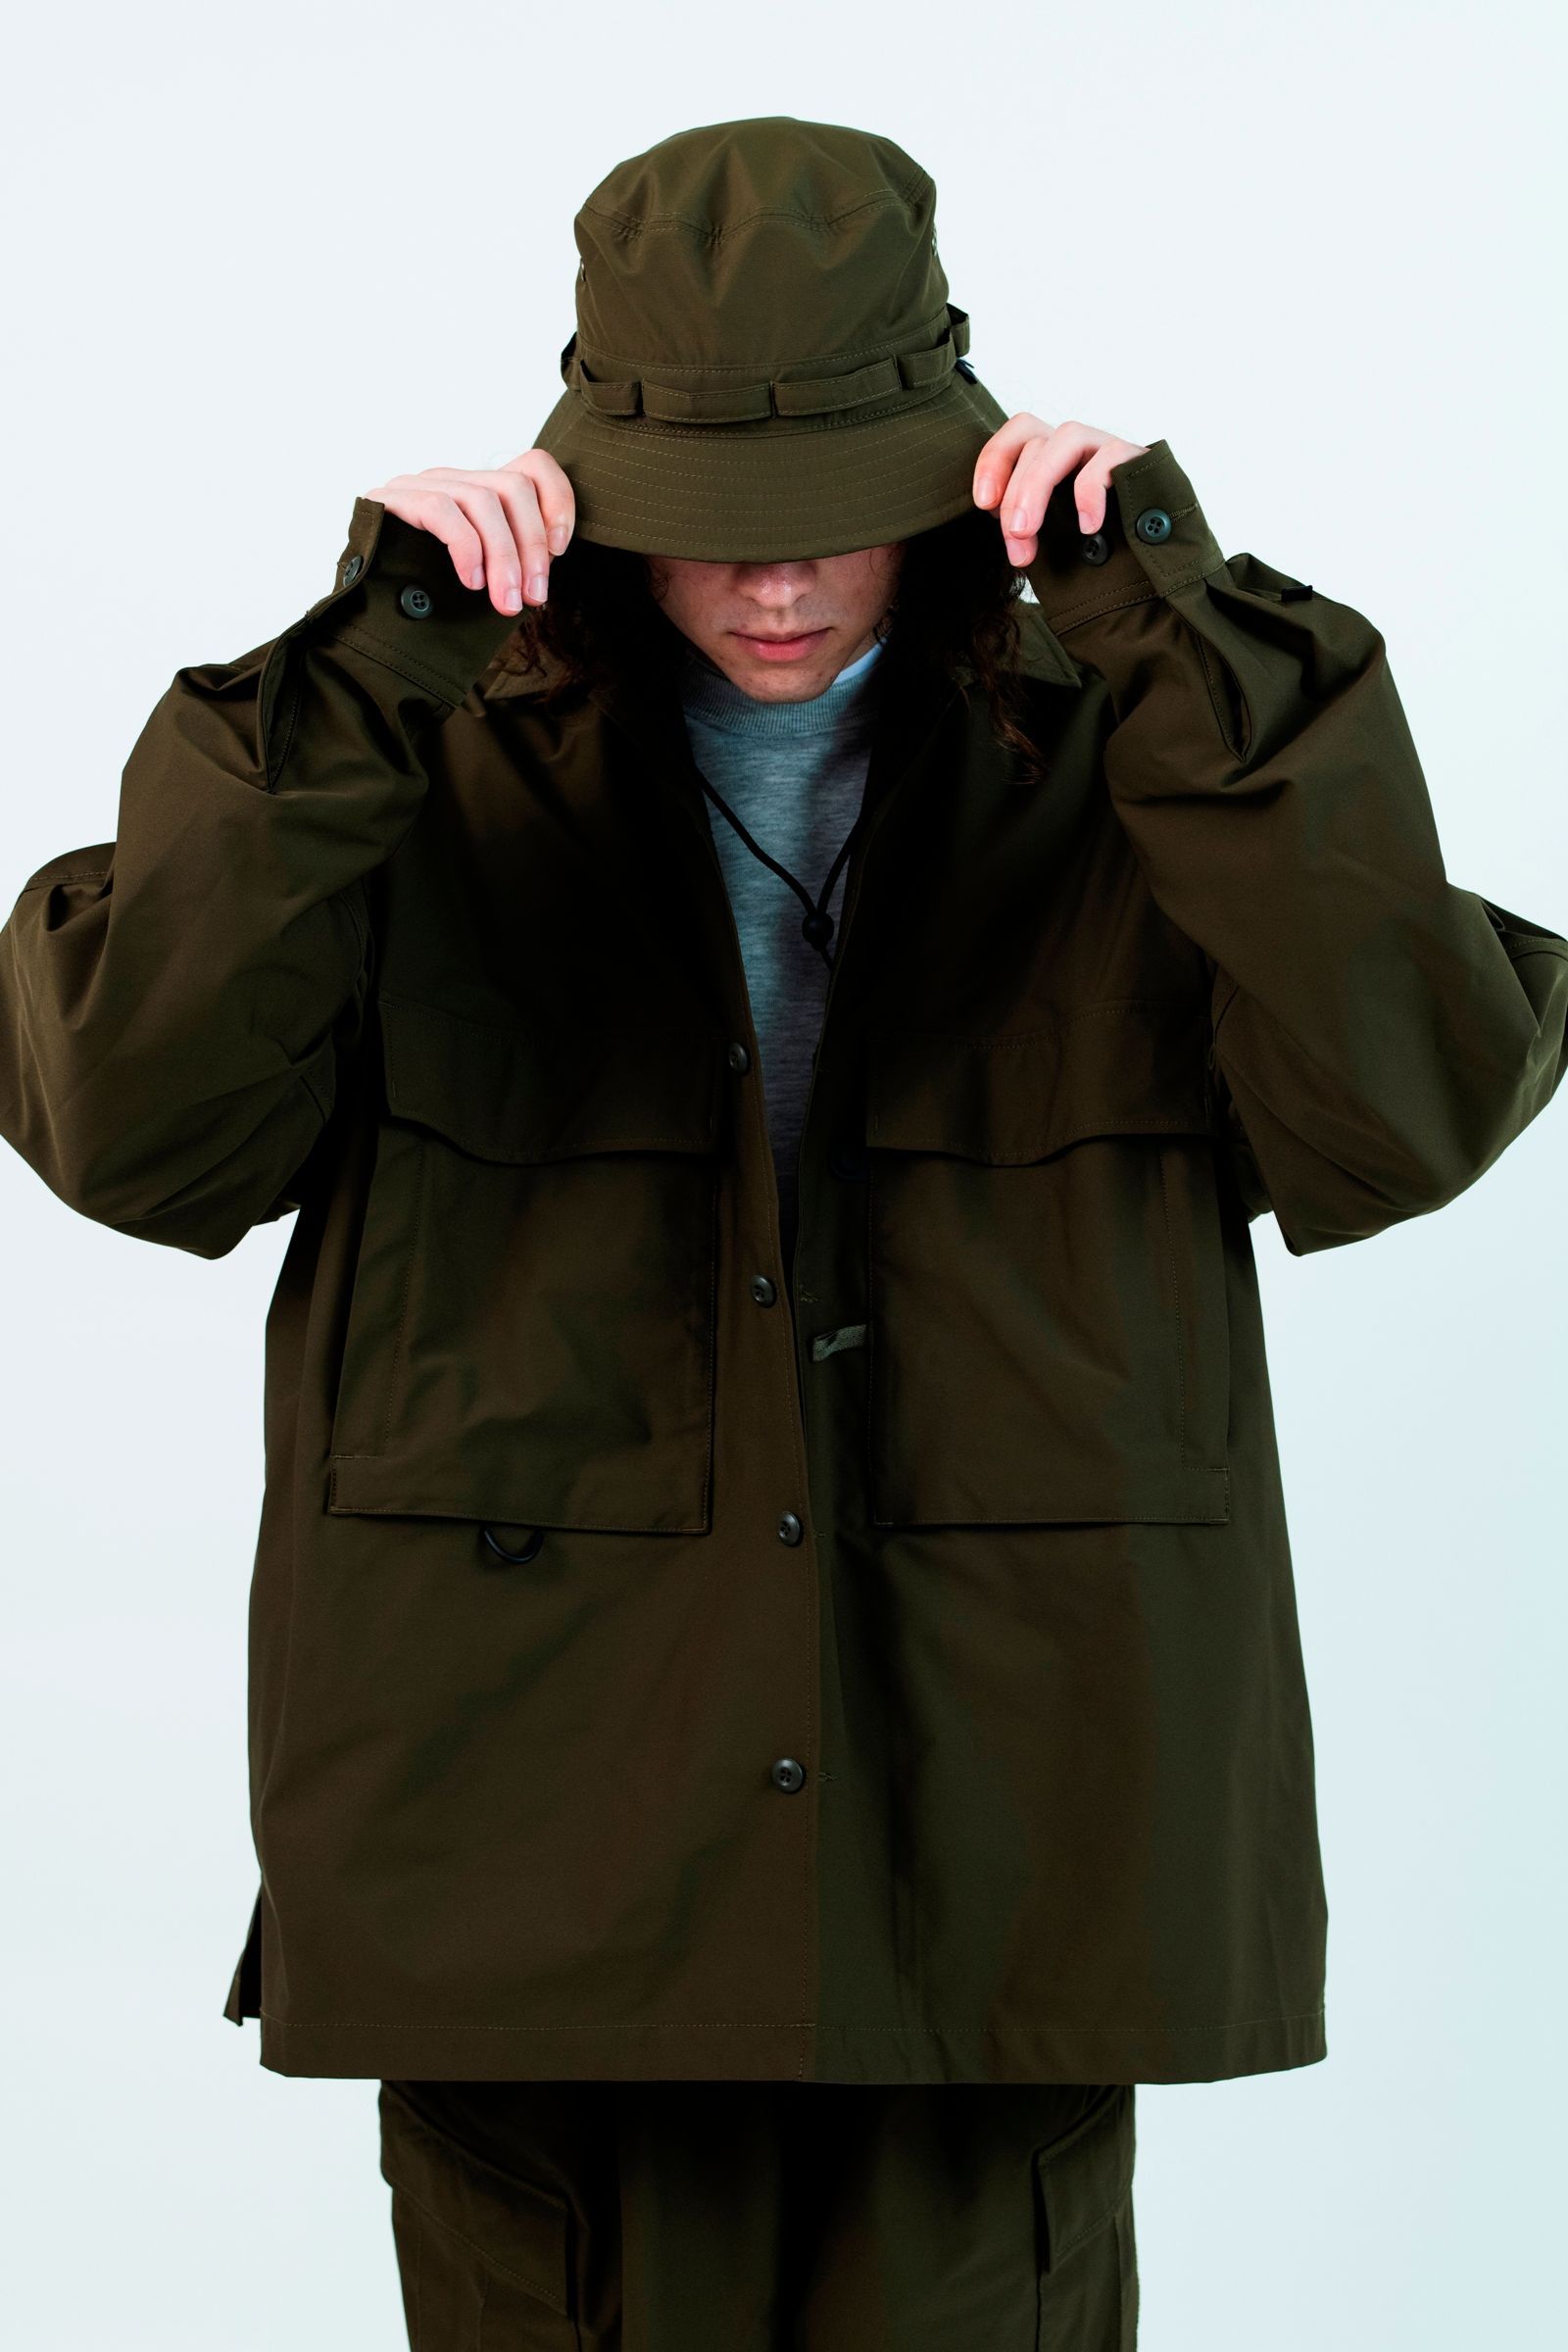 DAIWA PIER39 - 【先行予約】tech jungle fatigue jacket 21ss 1月28日